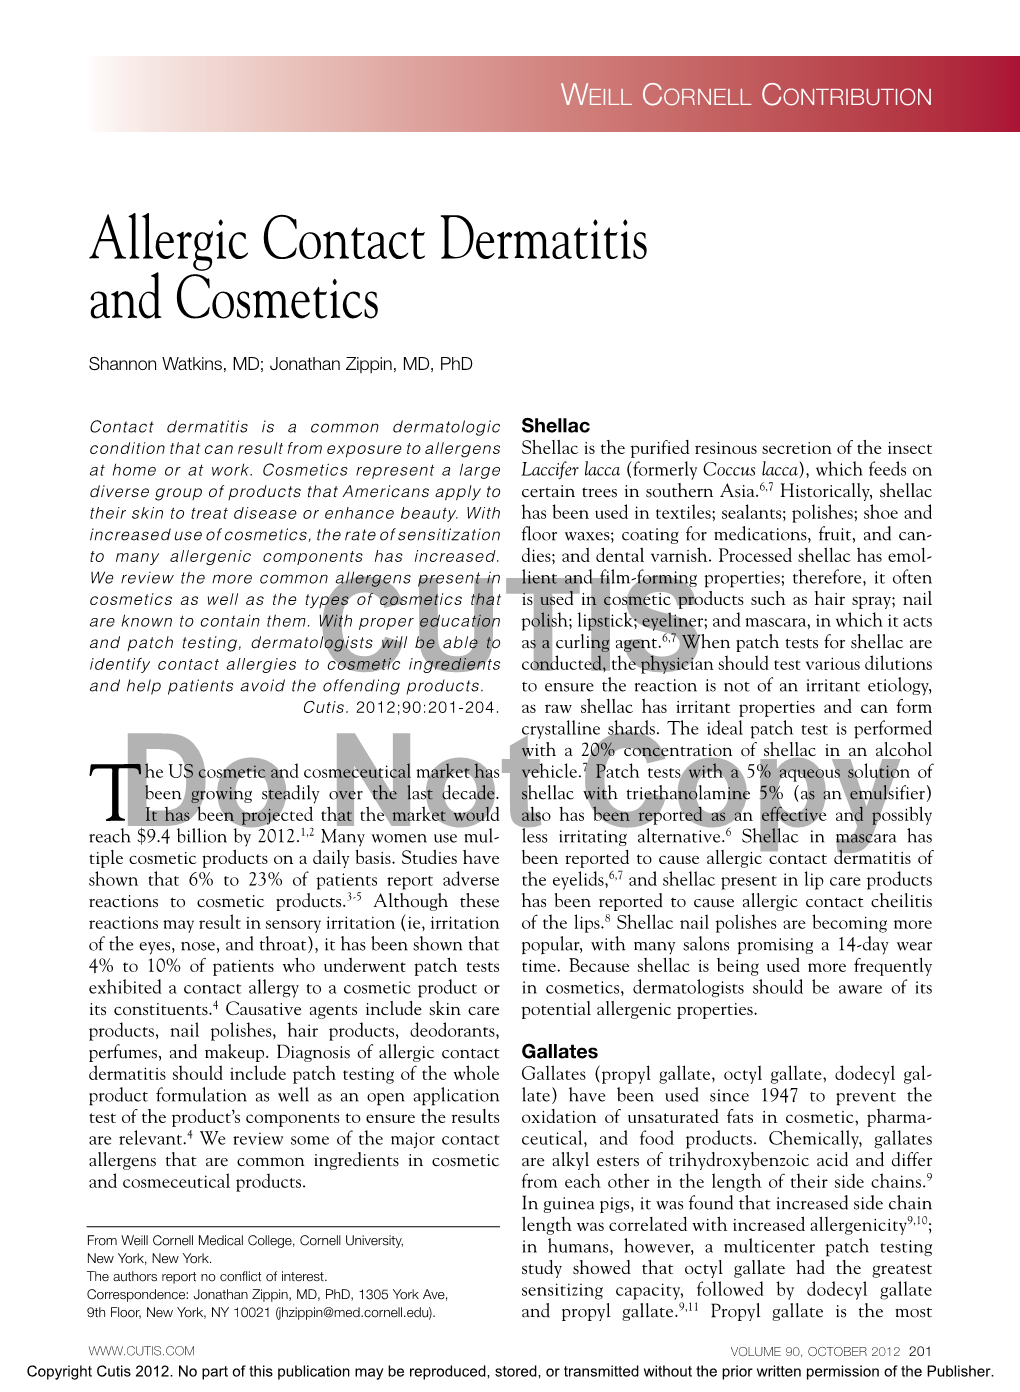 Allergic Contact Dermatitis and Cosmetics